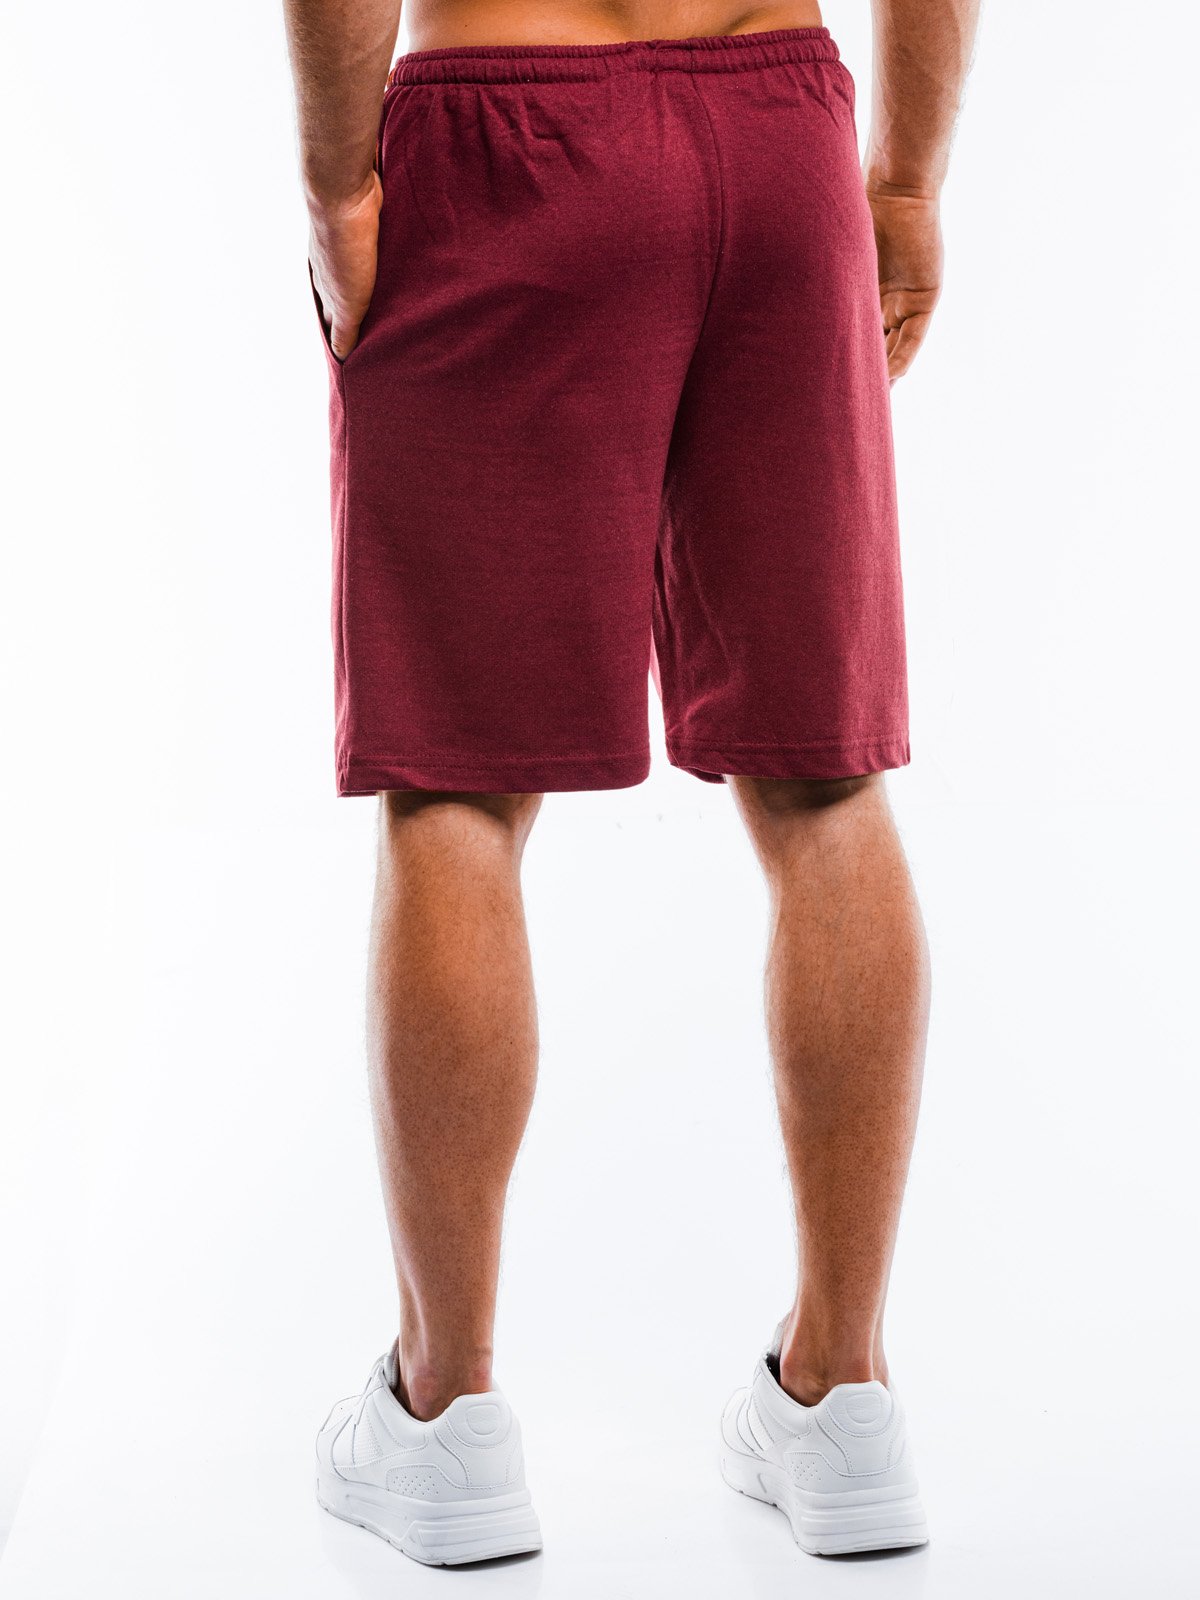 Men's sweatshorts W282 - dark red | MODONE wholesale - Clothing For Men